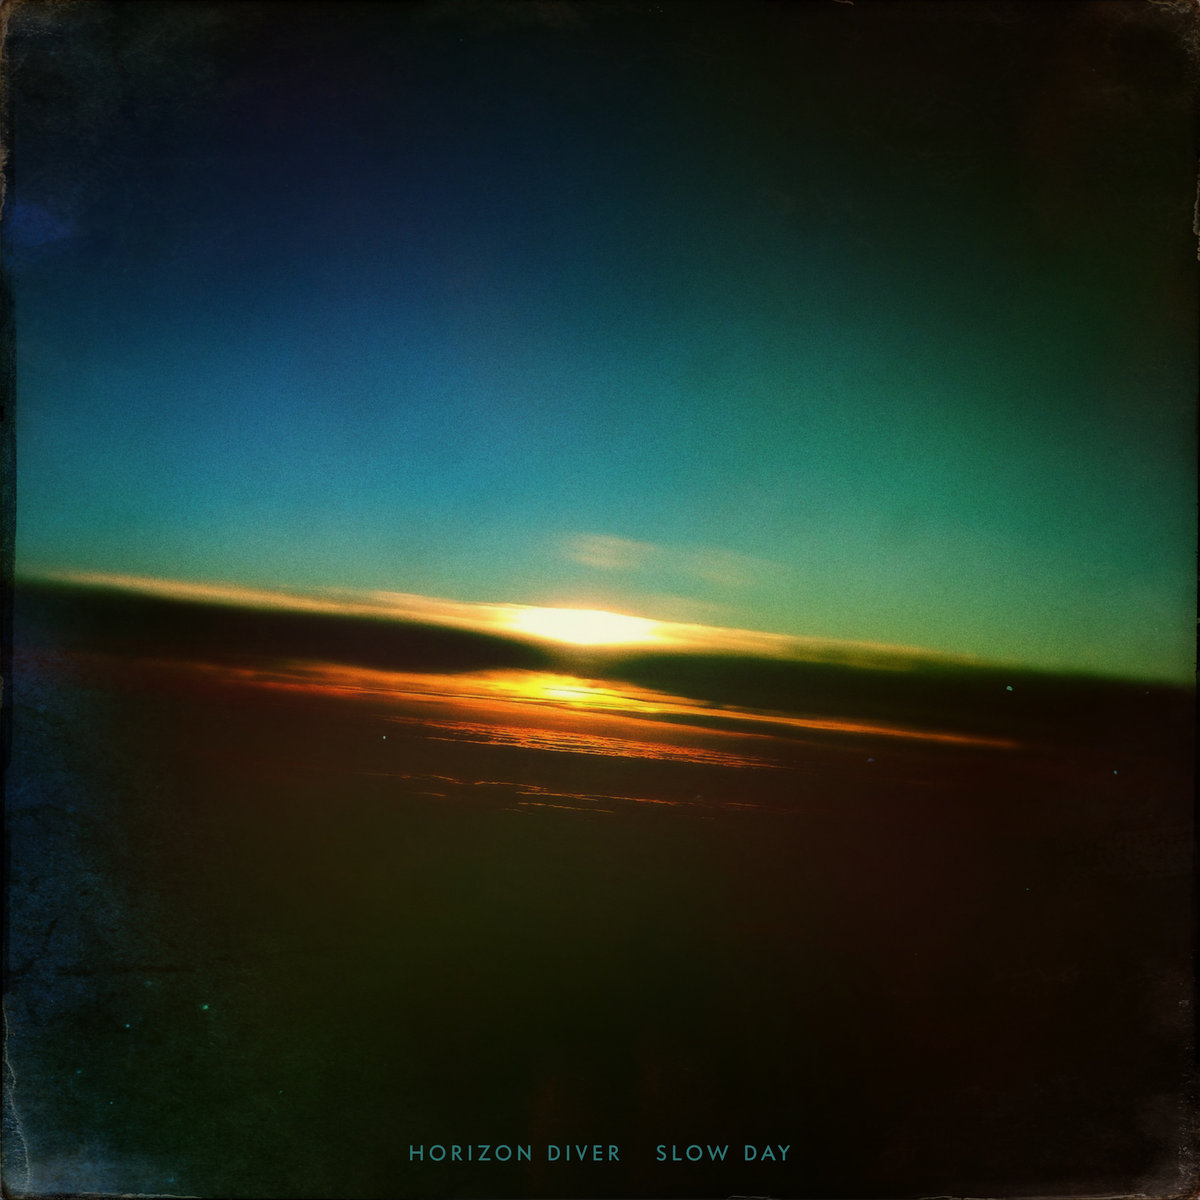 [album cover art] Horizon Diver - Slow Day